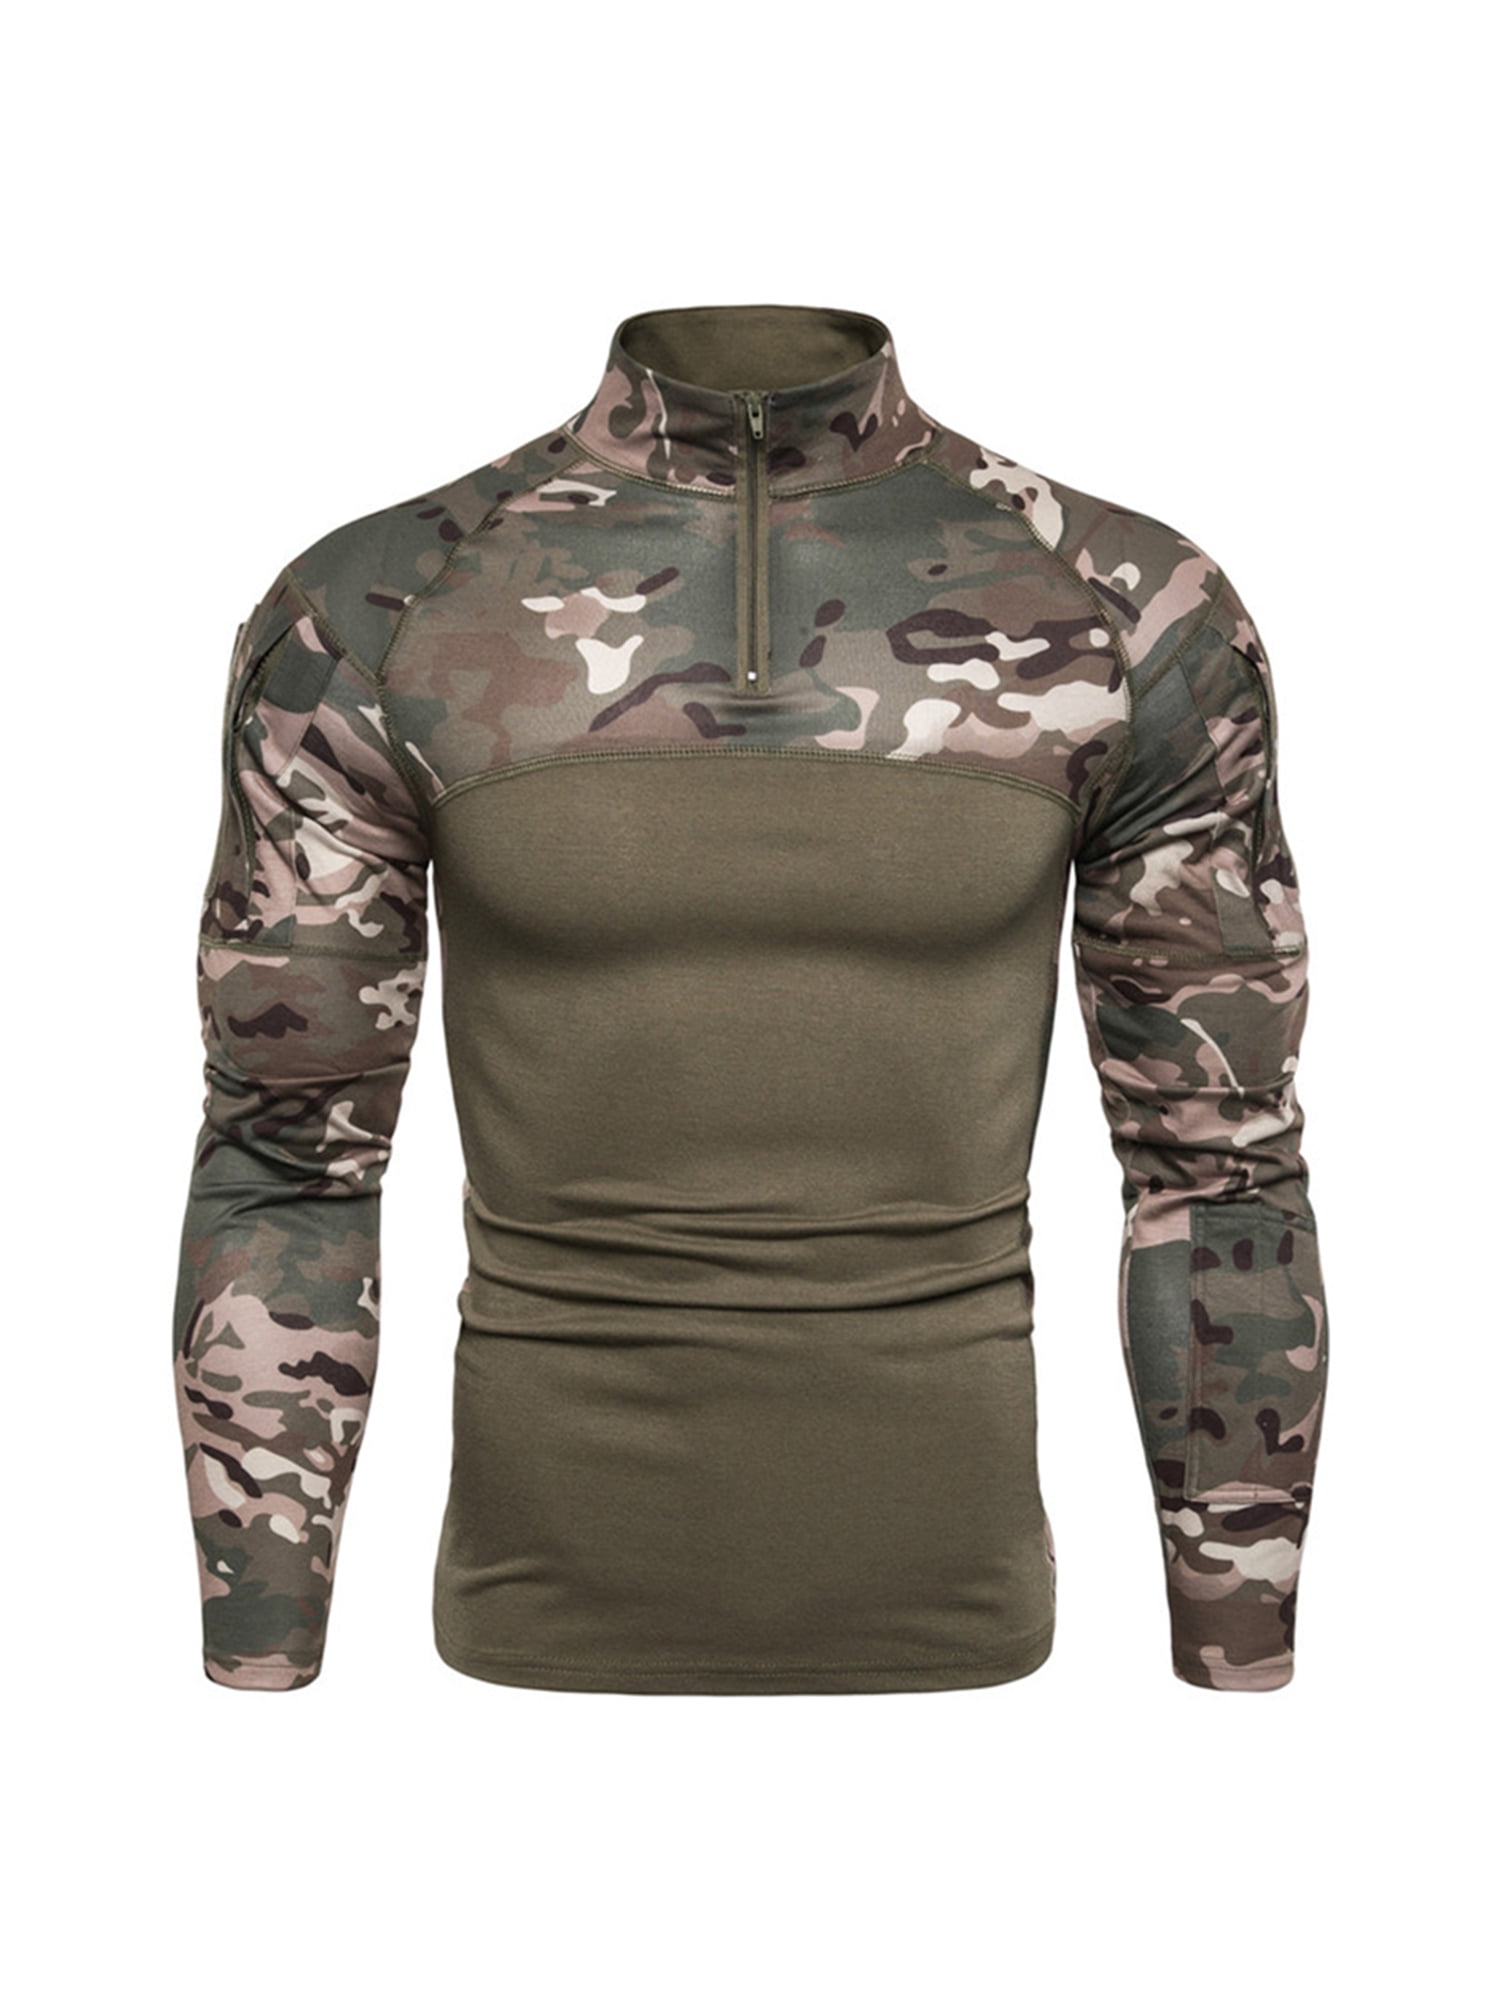 Mens Military T-Shirt Tactical Army Combat Shirt Casual Shirt Hiking Camouflage 